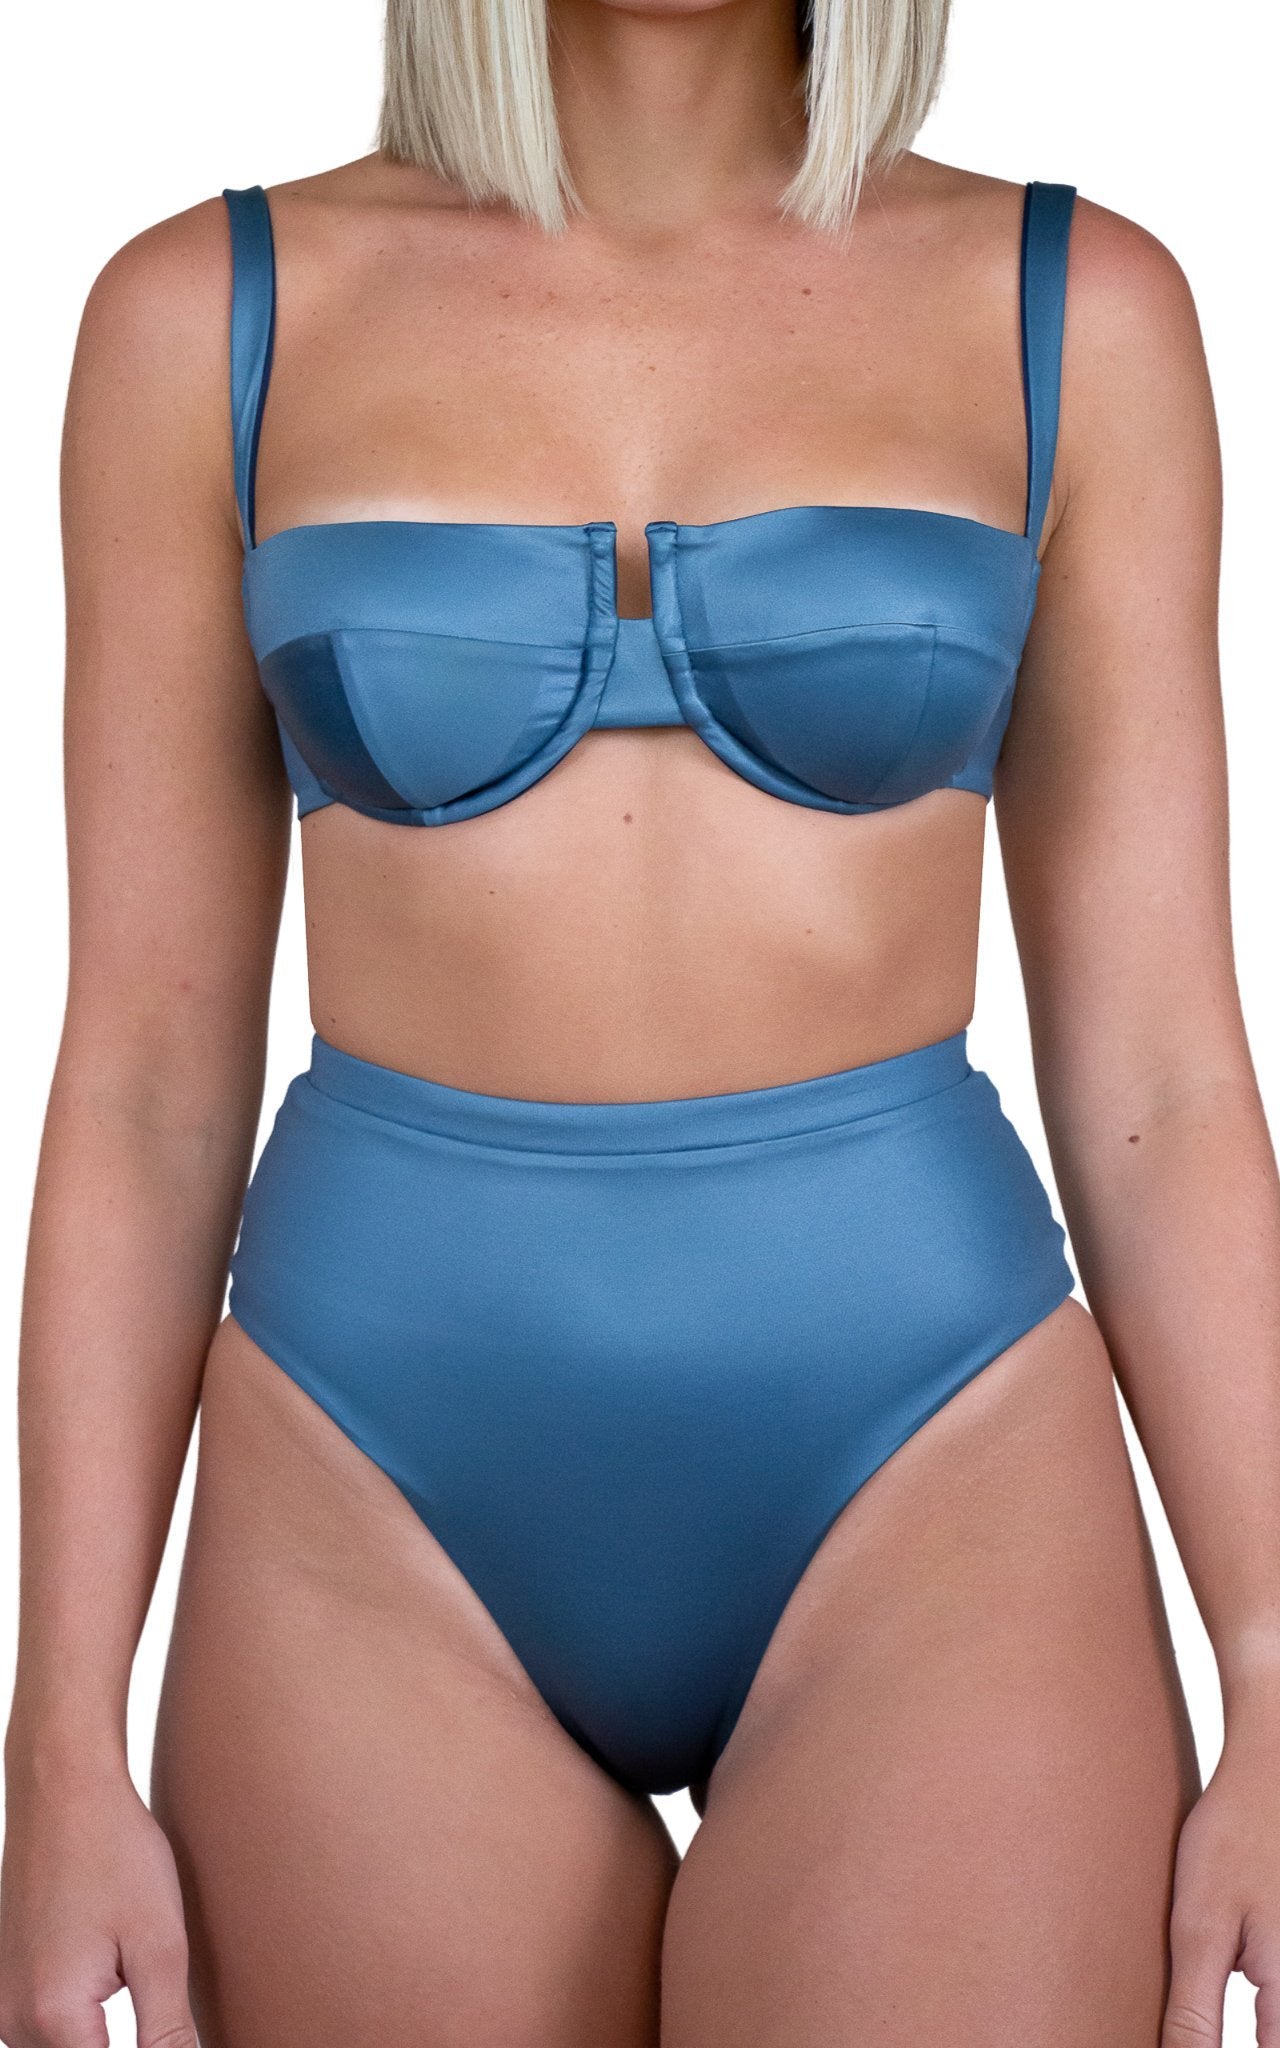 shiny blue high waisted medium coverage bikini bottom